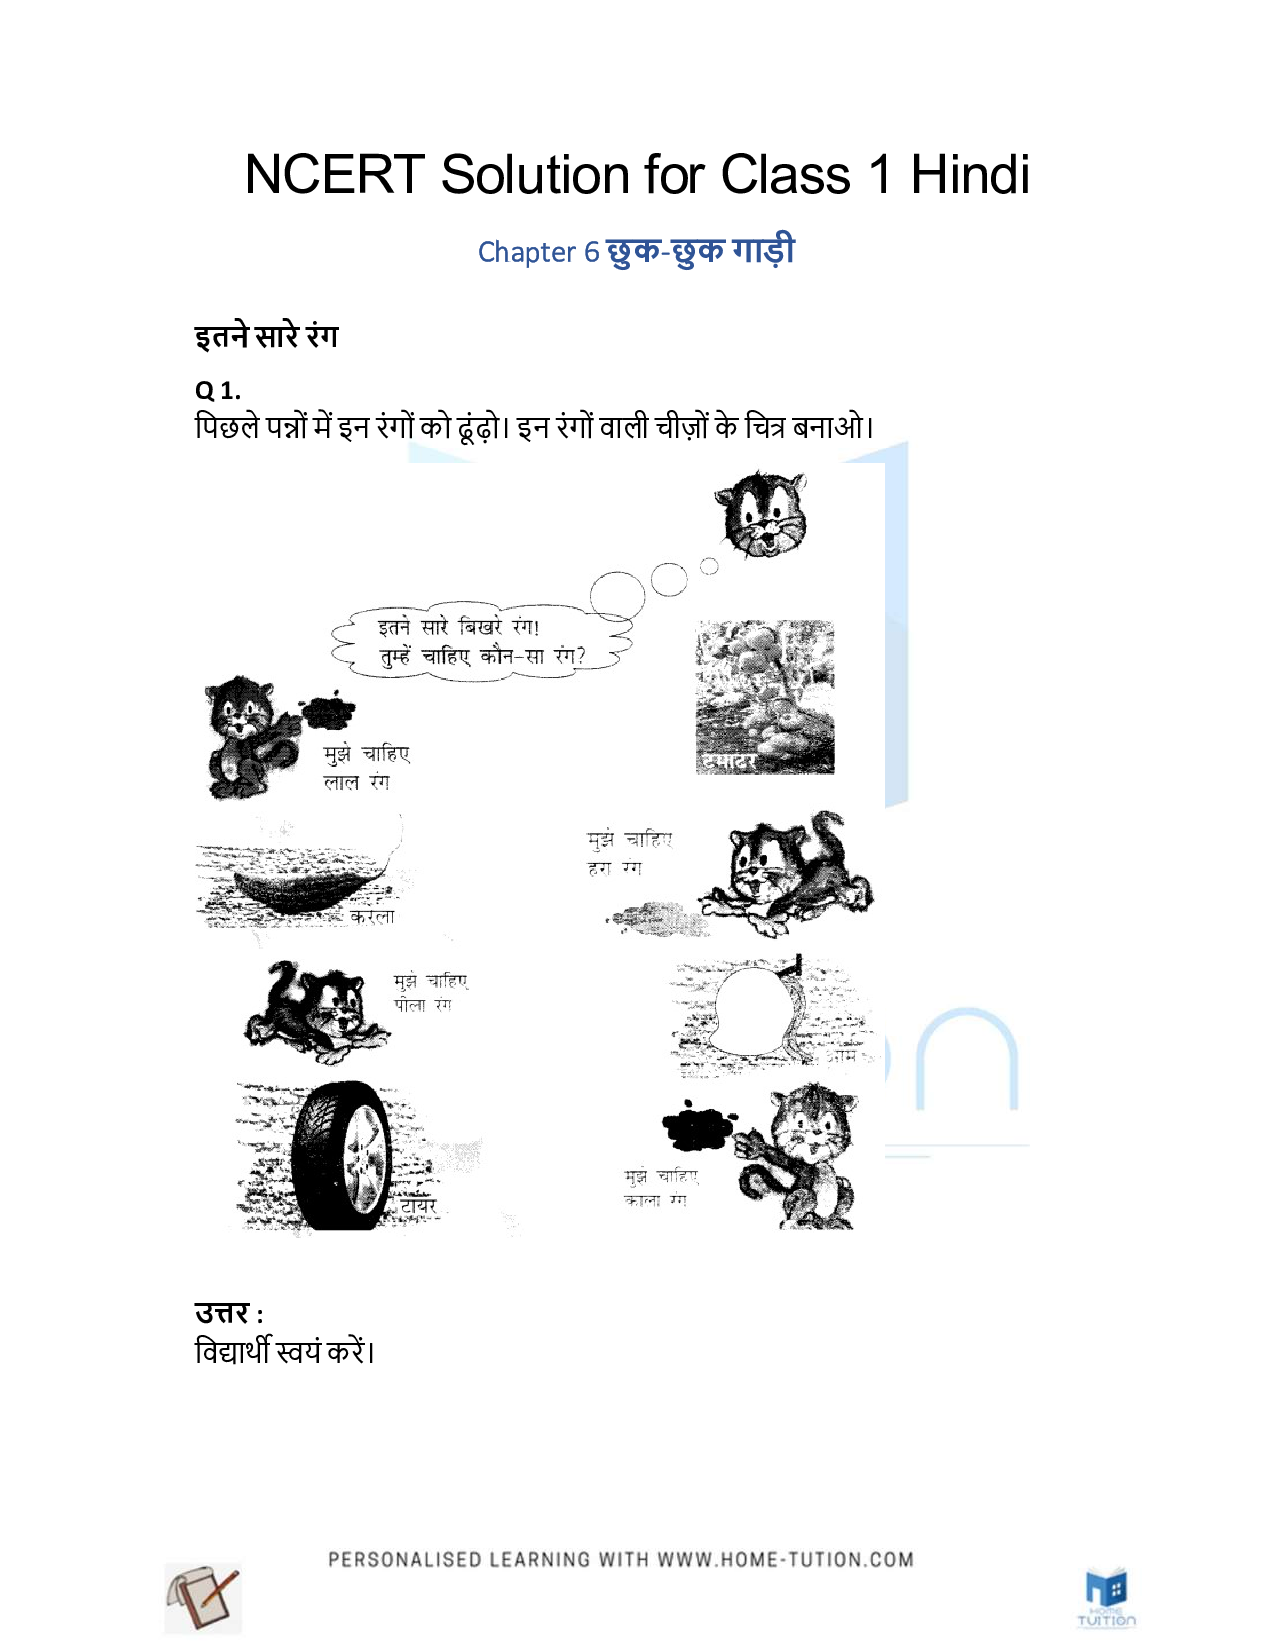 NCERT Solution for Class 1 Hindi Chapter 6 Chook Chook Gadi (छुक-छुक-गाड़ी)